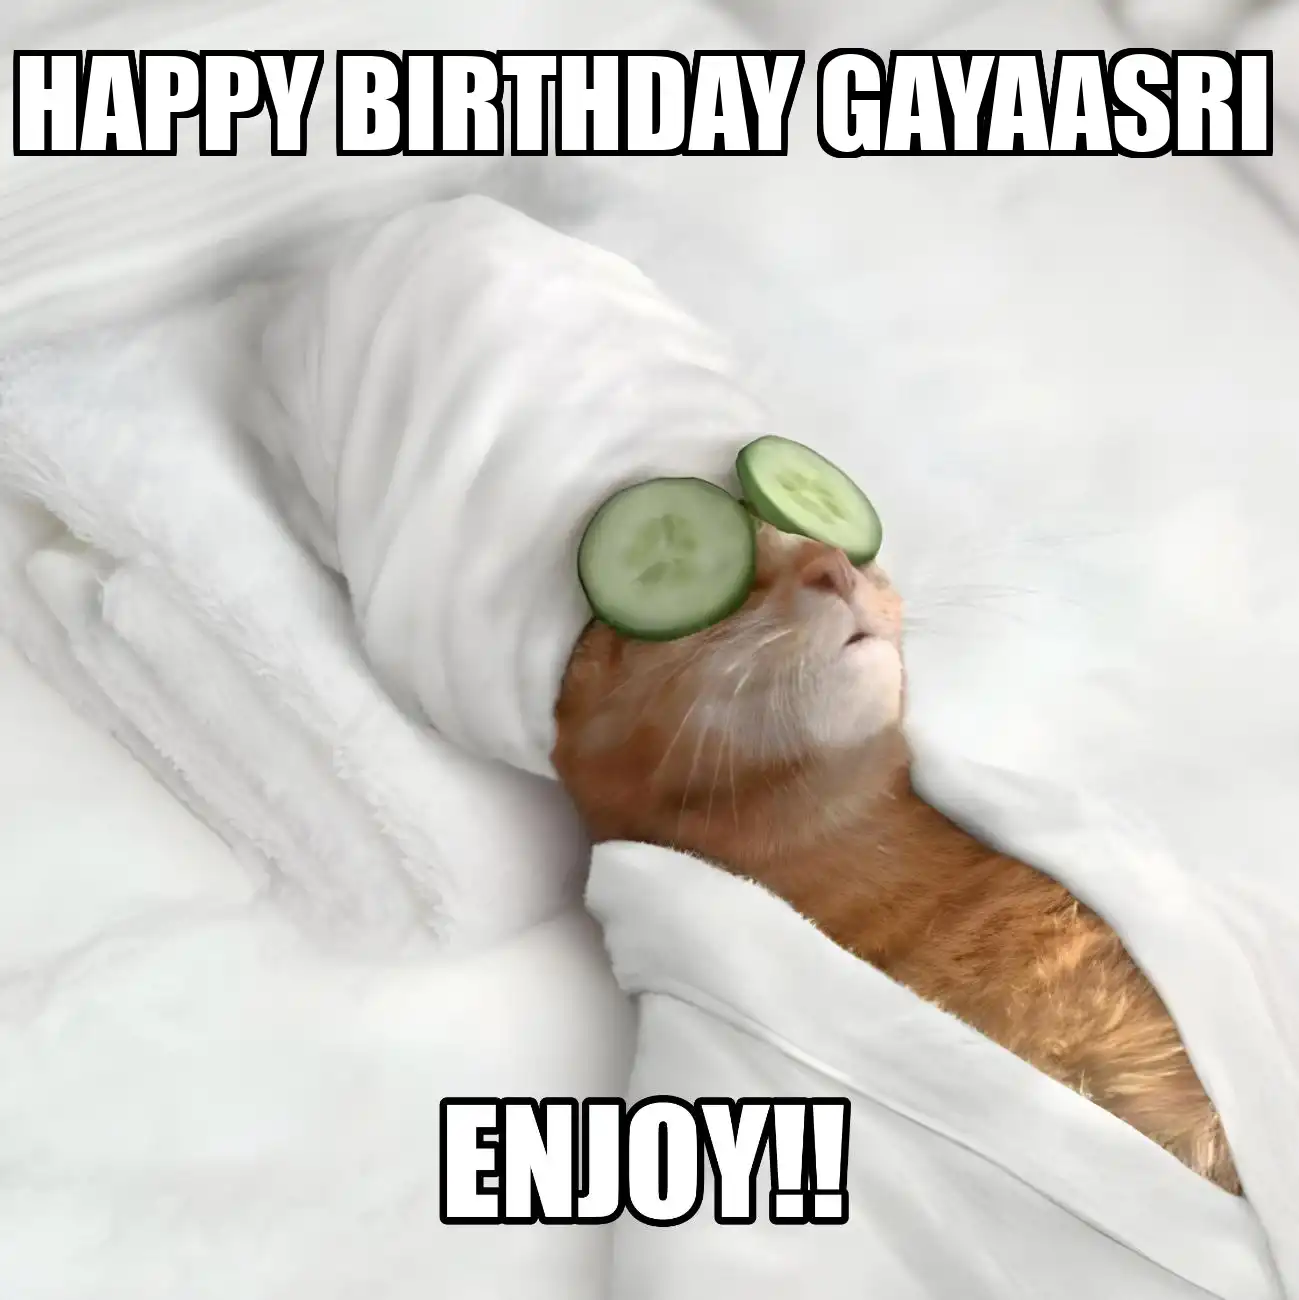 Happy Birthday Gayaasri Enjoy Cat Meme